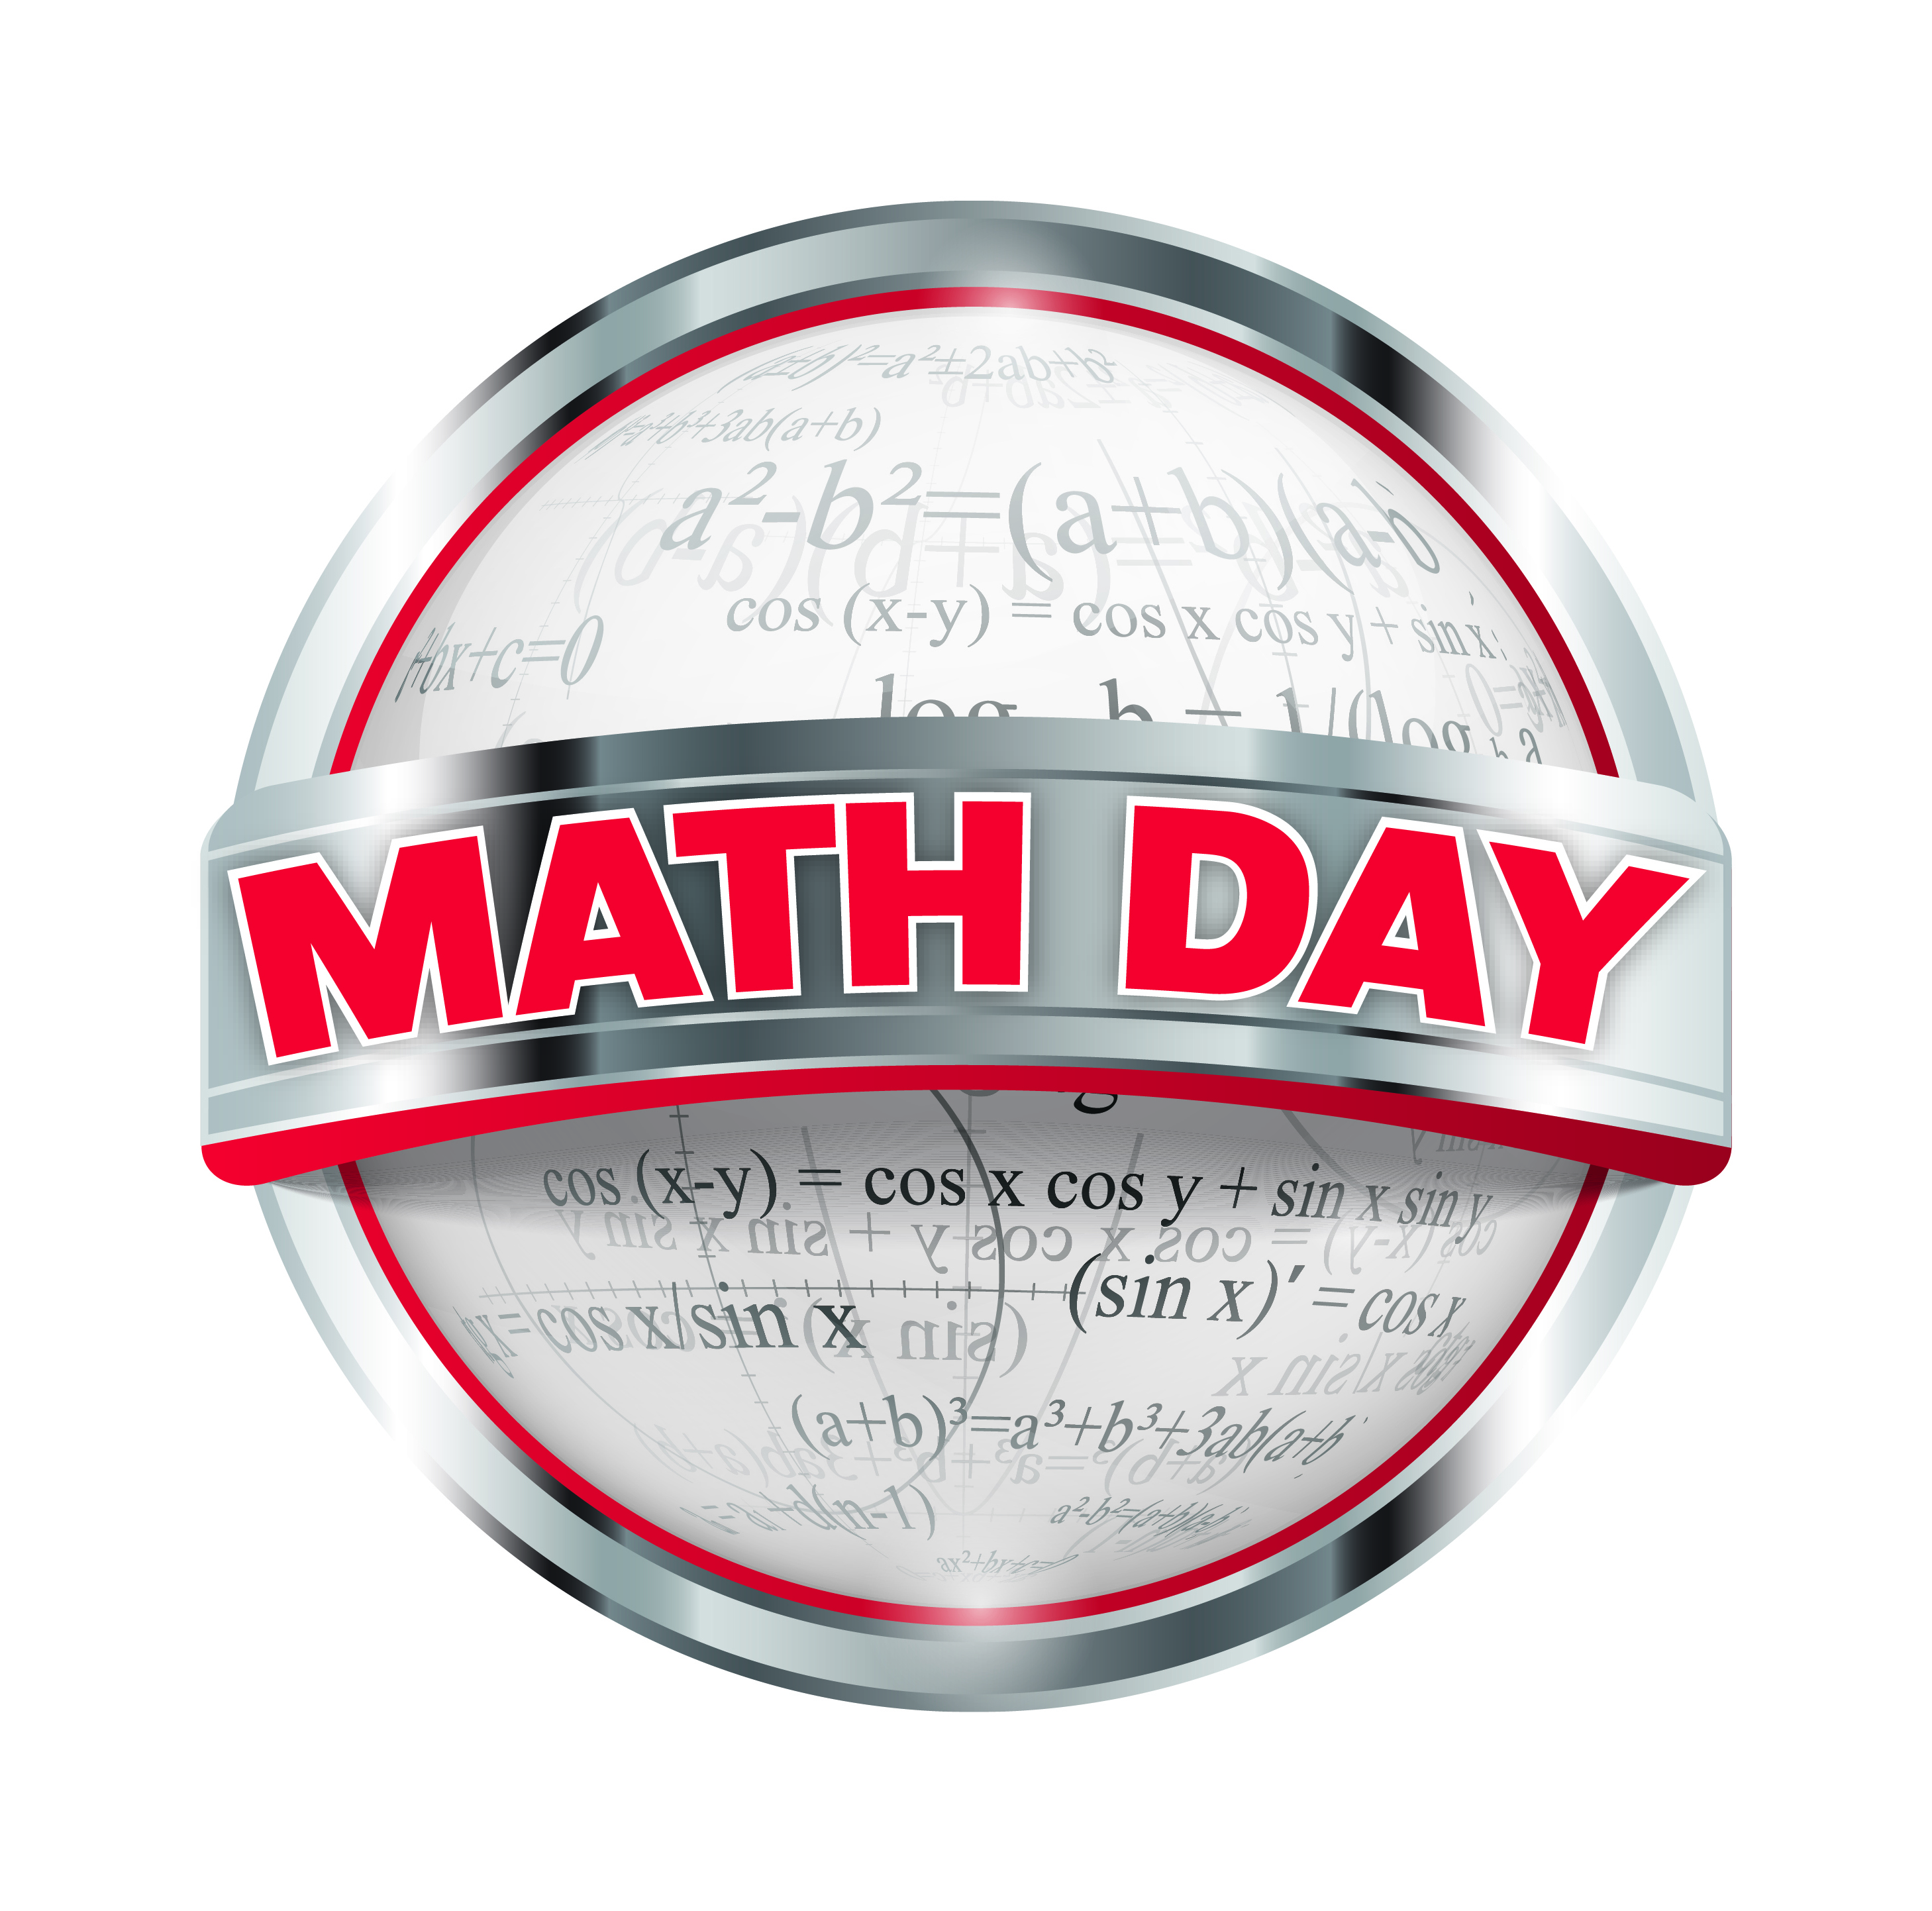 https://math.unl.edu/programs/mathday